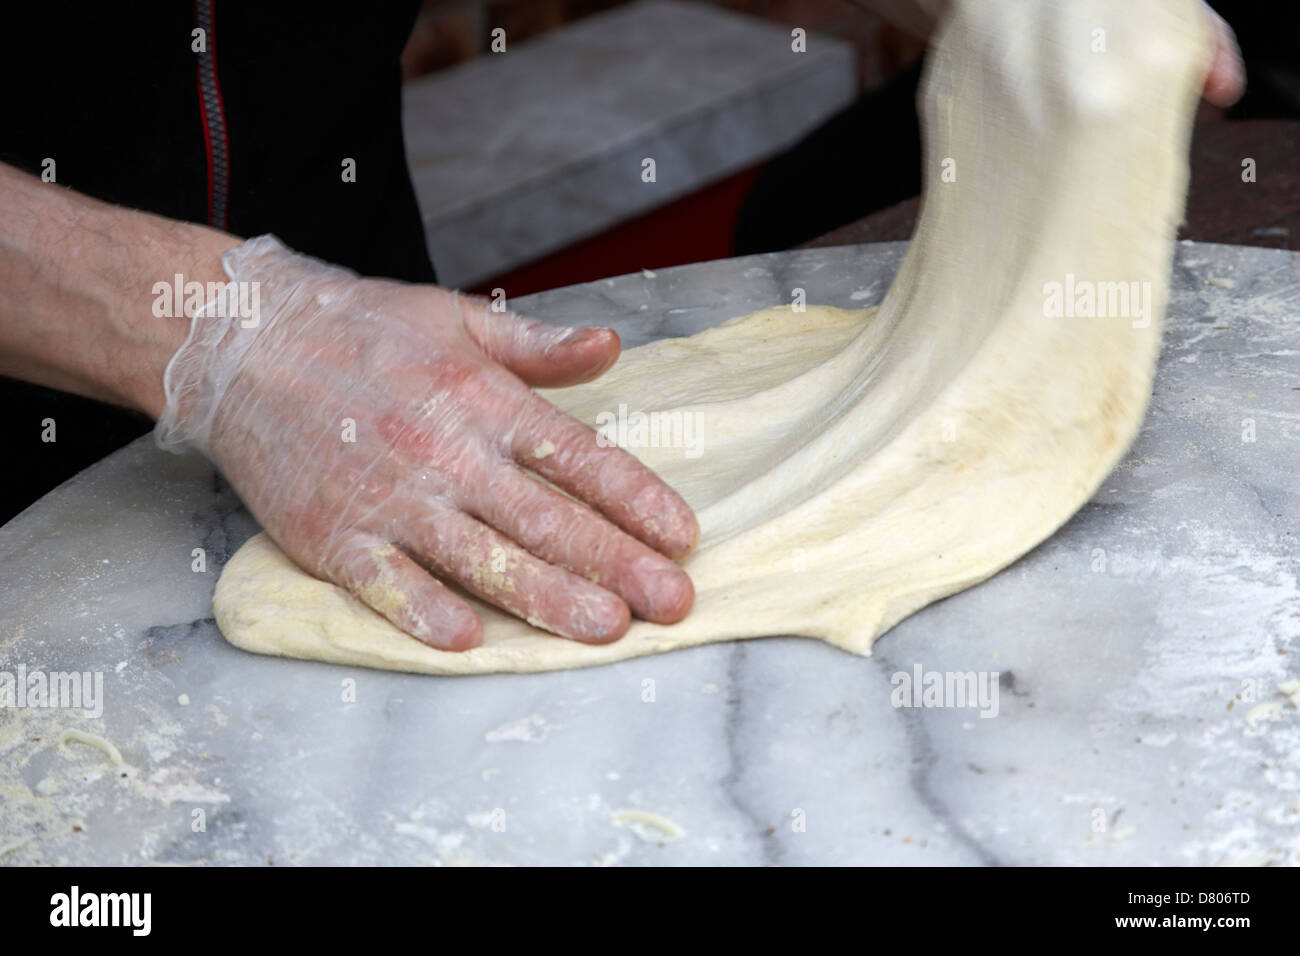 man making pizza stretching base dough deliberate motion blur Stock Photo